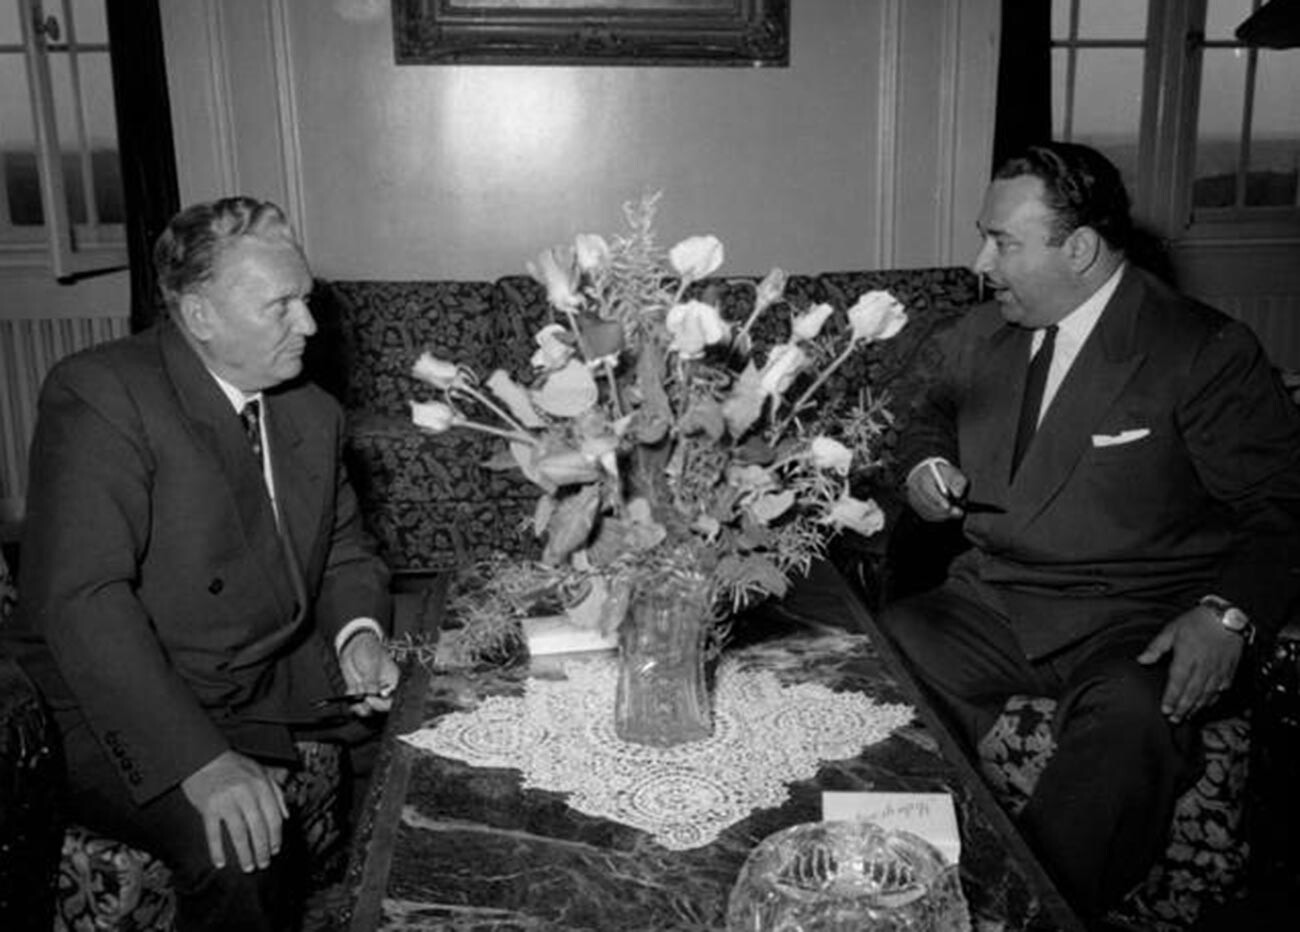 Tito meets Iosif Grigulevich who poses as the Costa Rican ambassador in Yugoslavia.